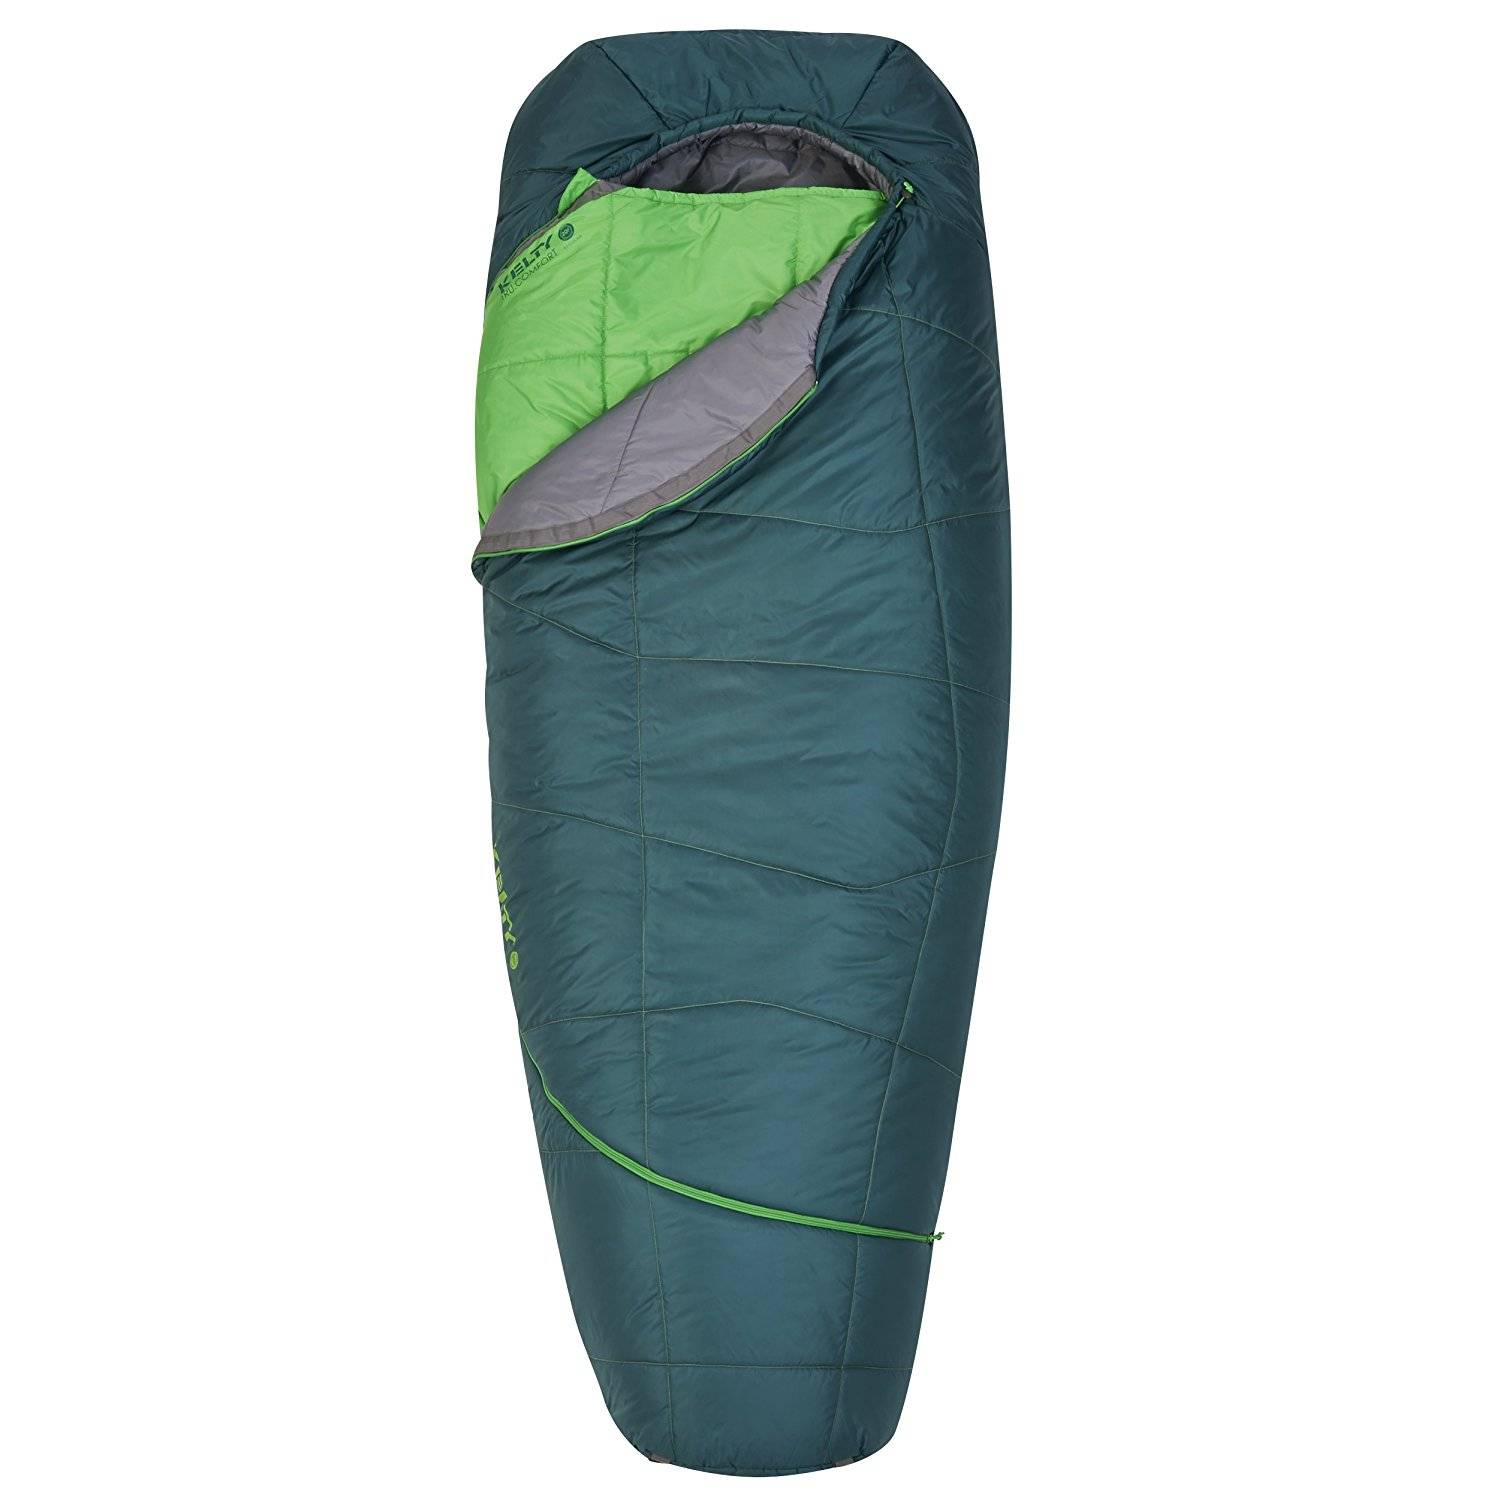 Kelty Tru.Comfort 20°F Camping Sleeping Bag